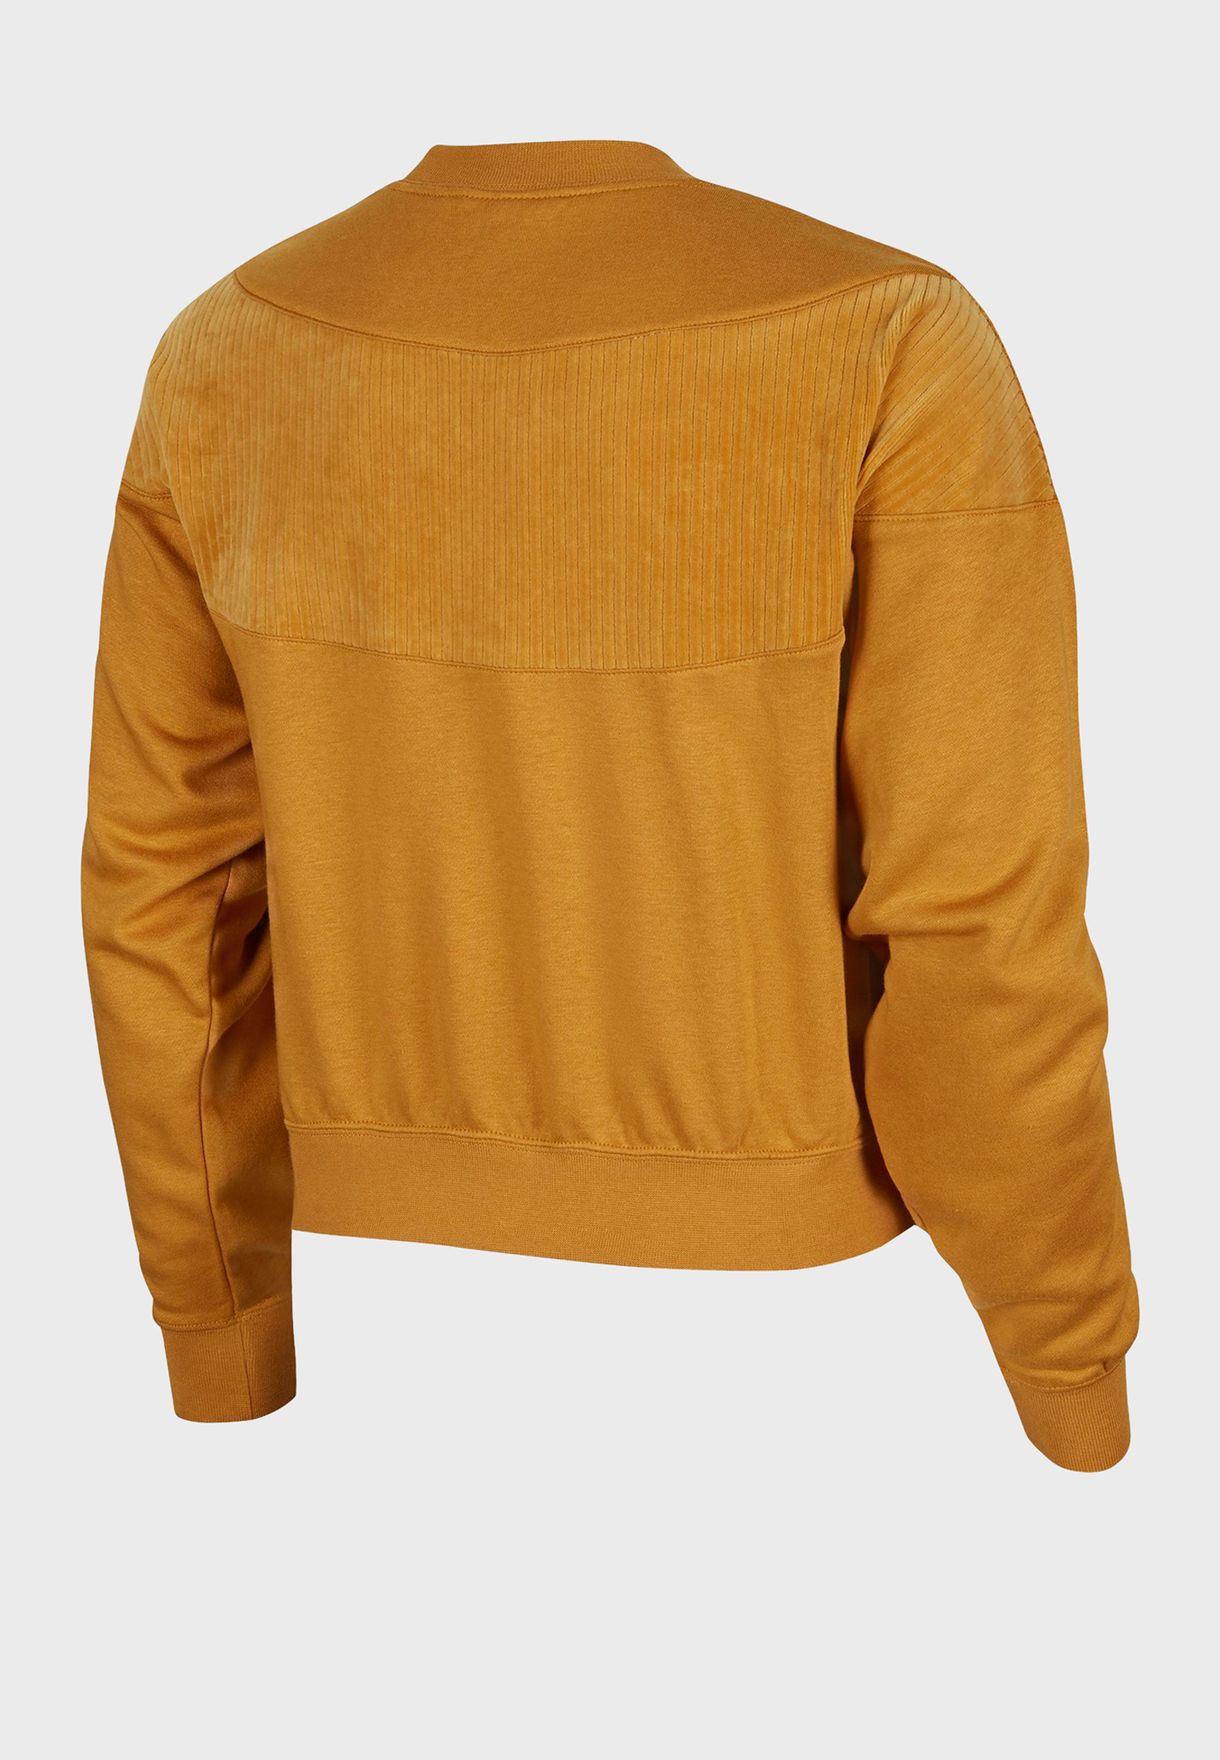 NSW Heritage Velour Sweatshirt